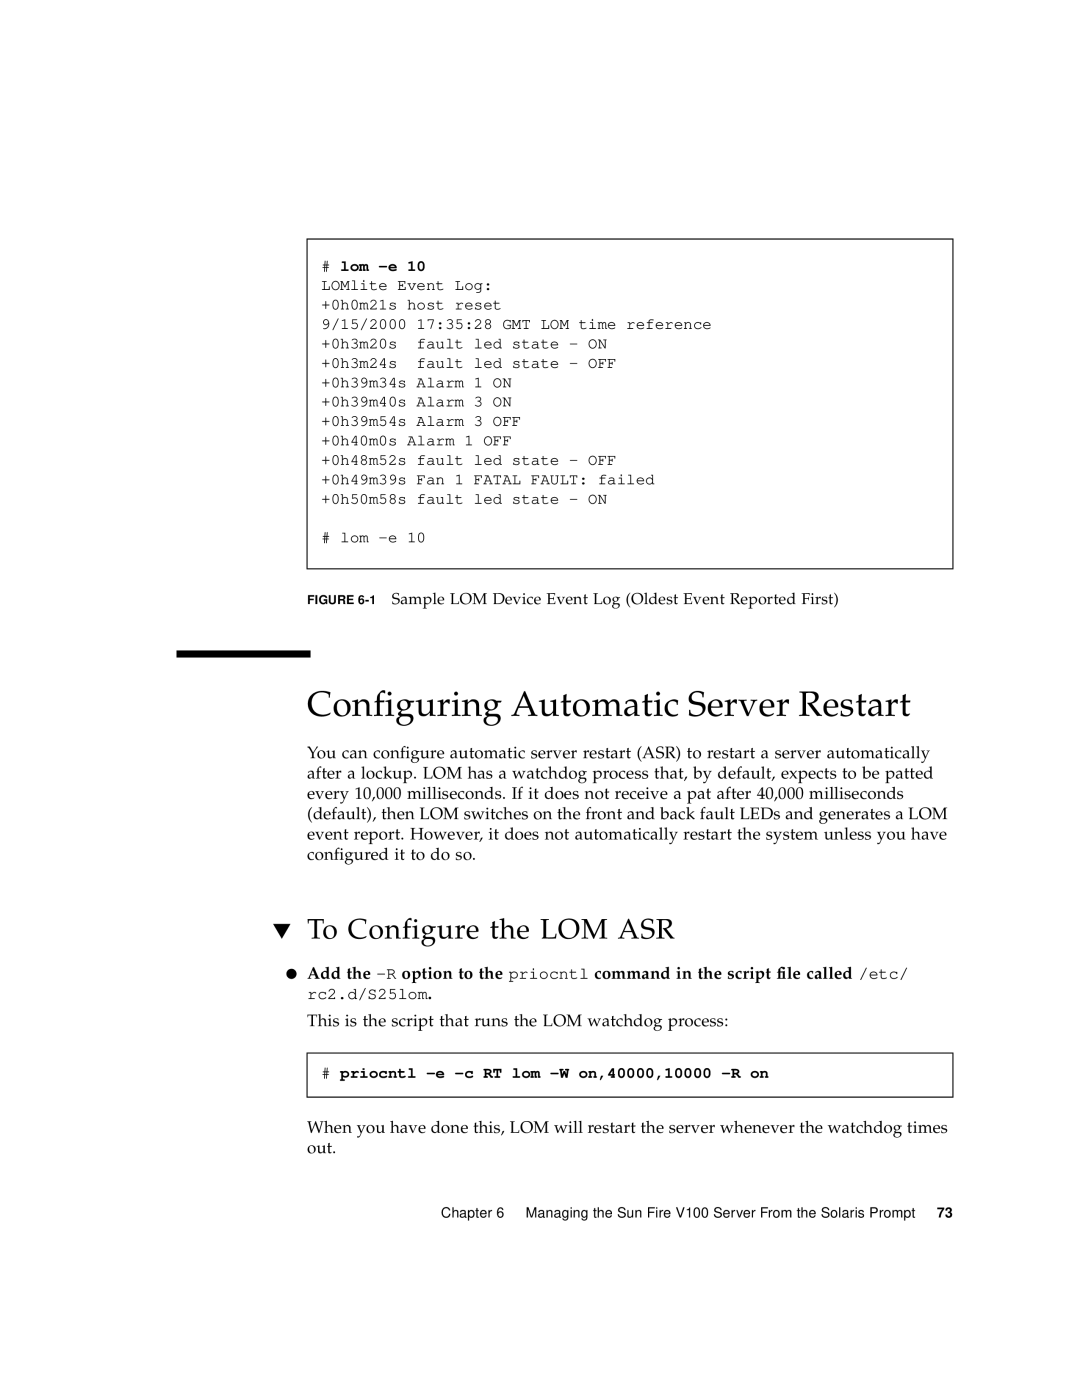 Sun Microsystems Sun Fire V100 manual Configuring Automatic Server Restart, To Configure the LOM ASR 